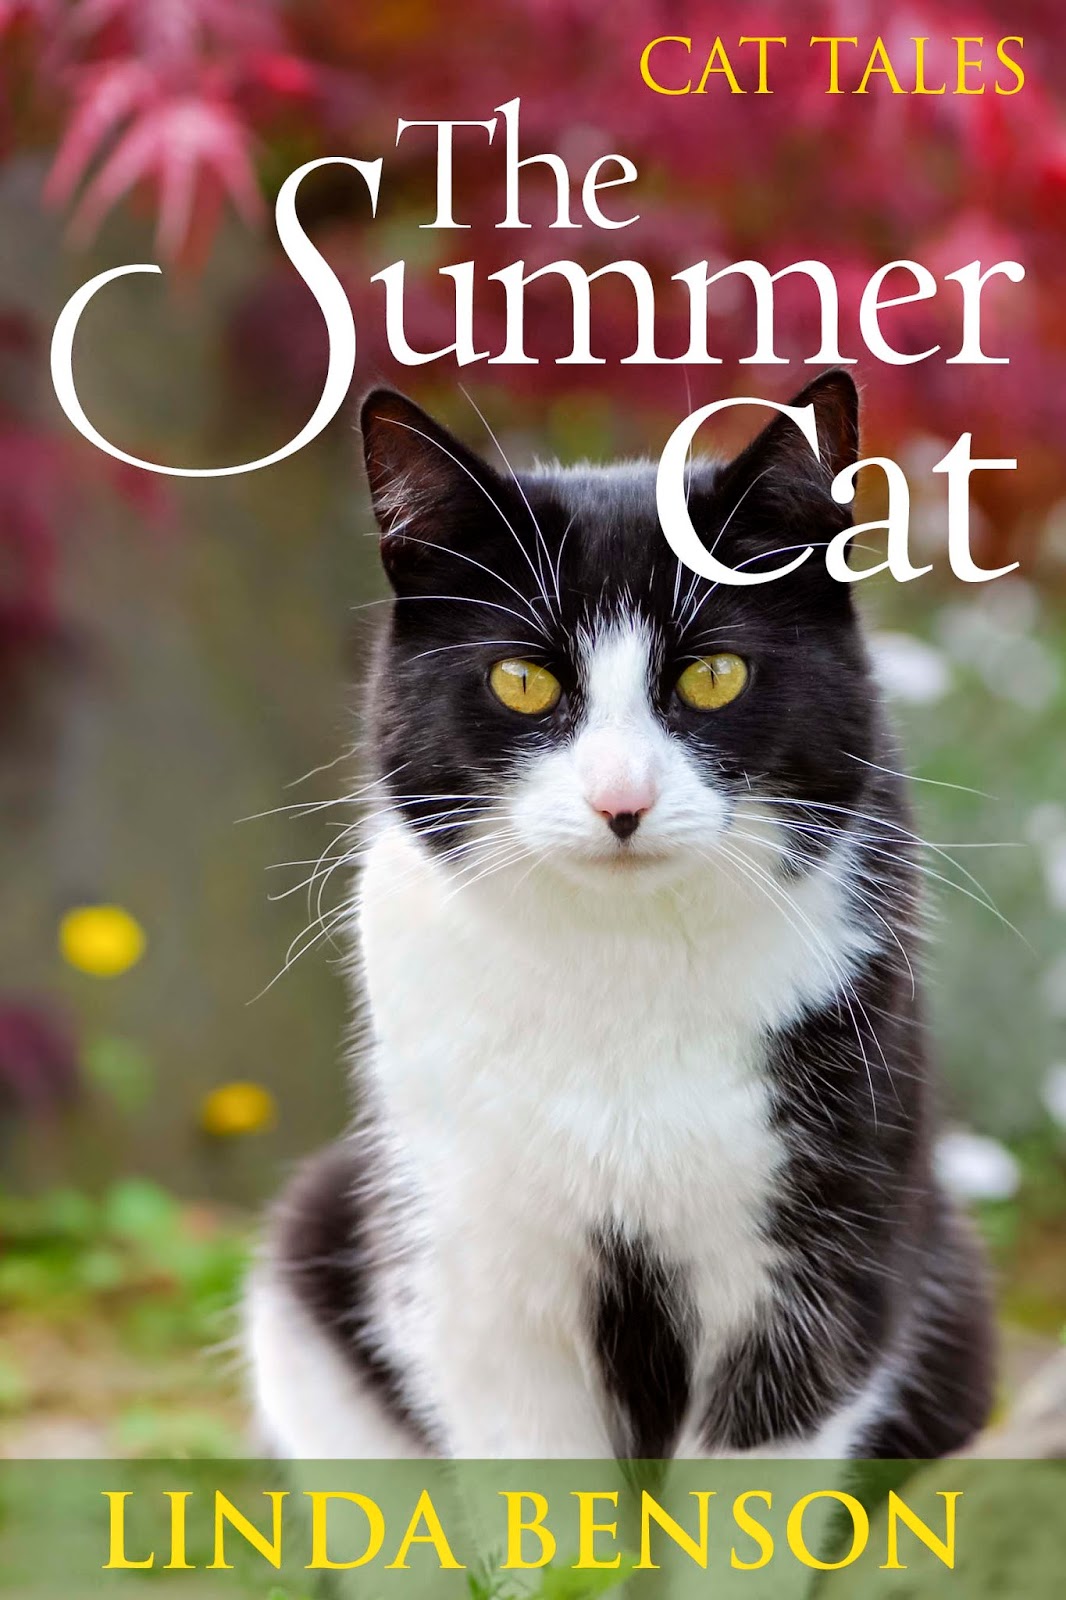 http://www.amazon.com/Summer-Cat-Tales-ebook/dp/B00KRPZLVQ